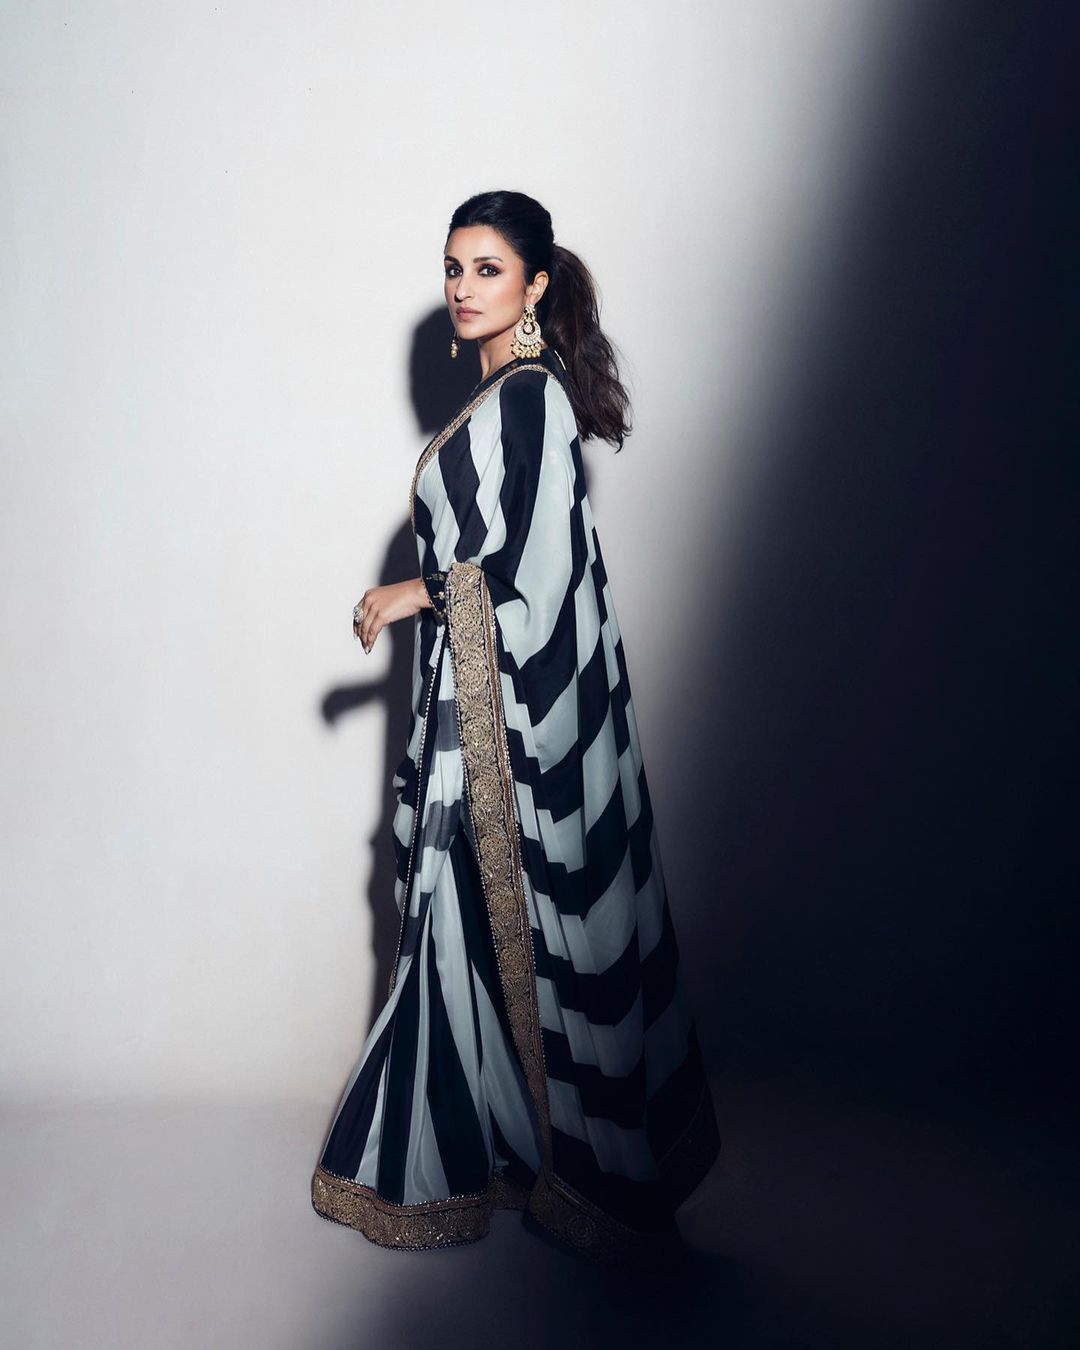 Parineeti Chopra looks elegant in the blck and white saree